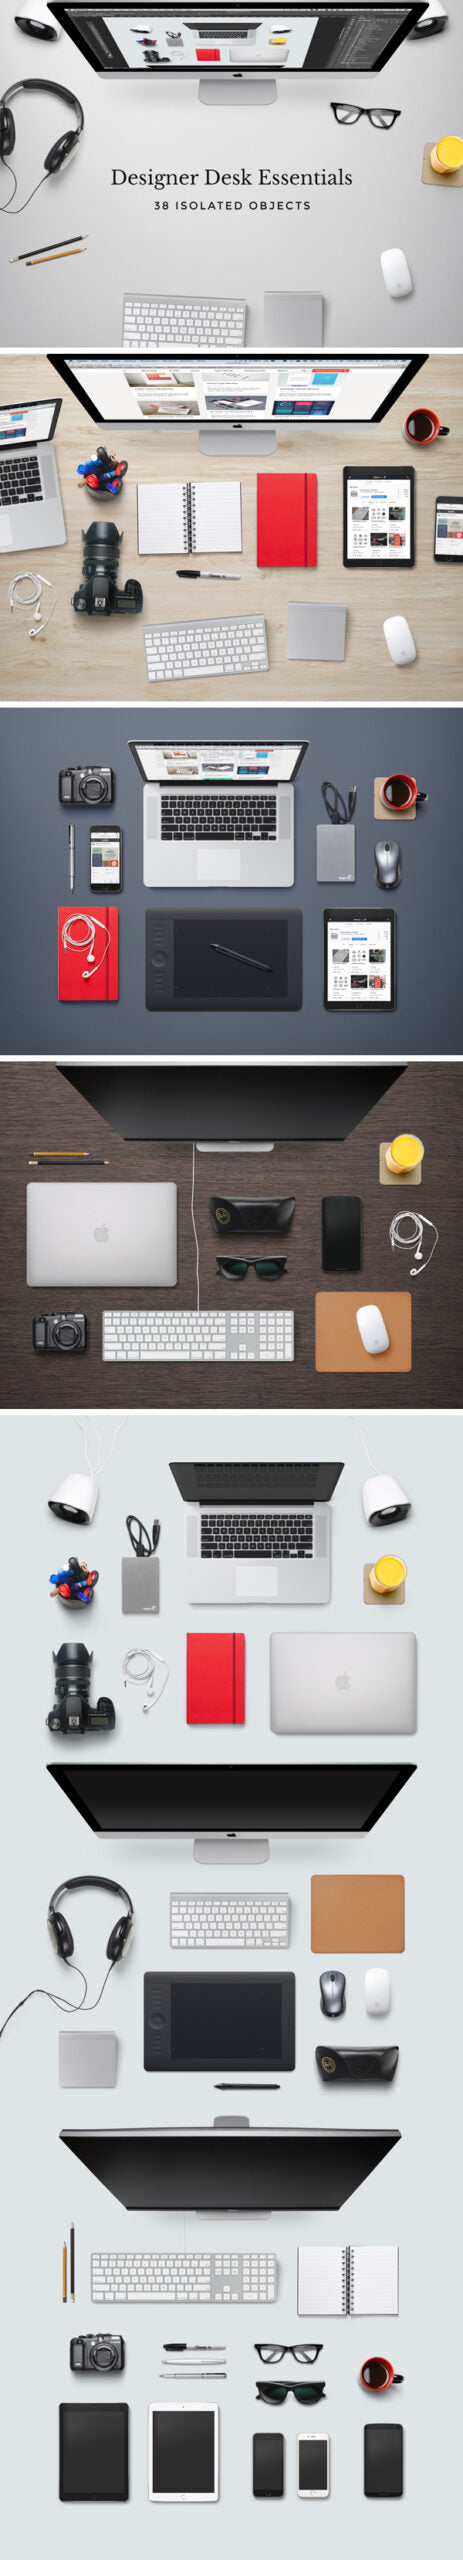 Free Designer Desk Essentials